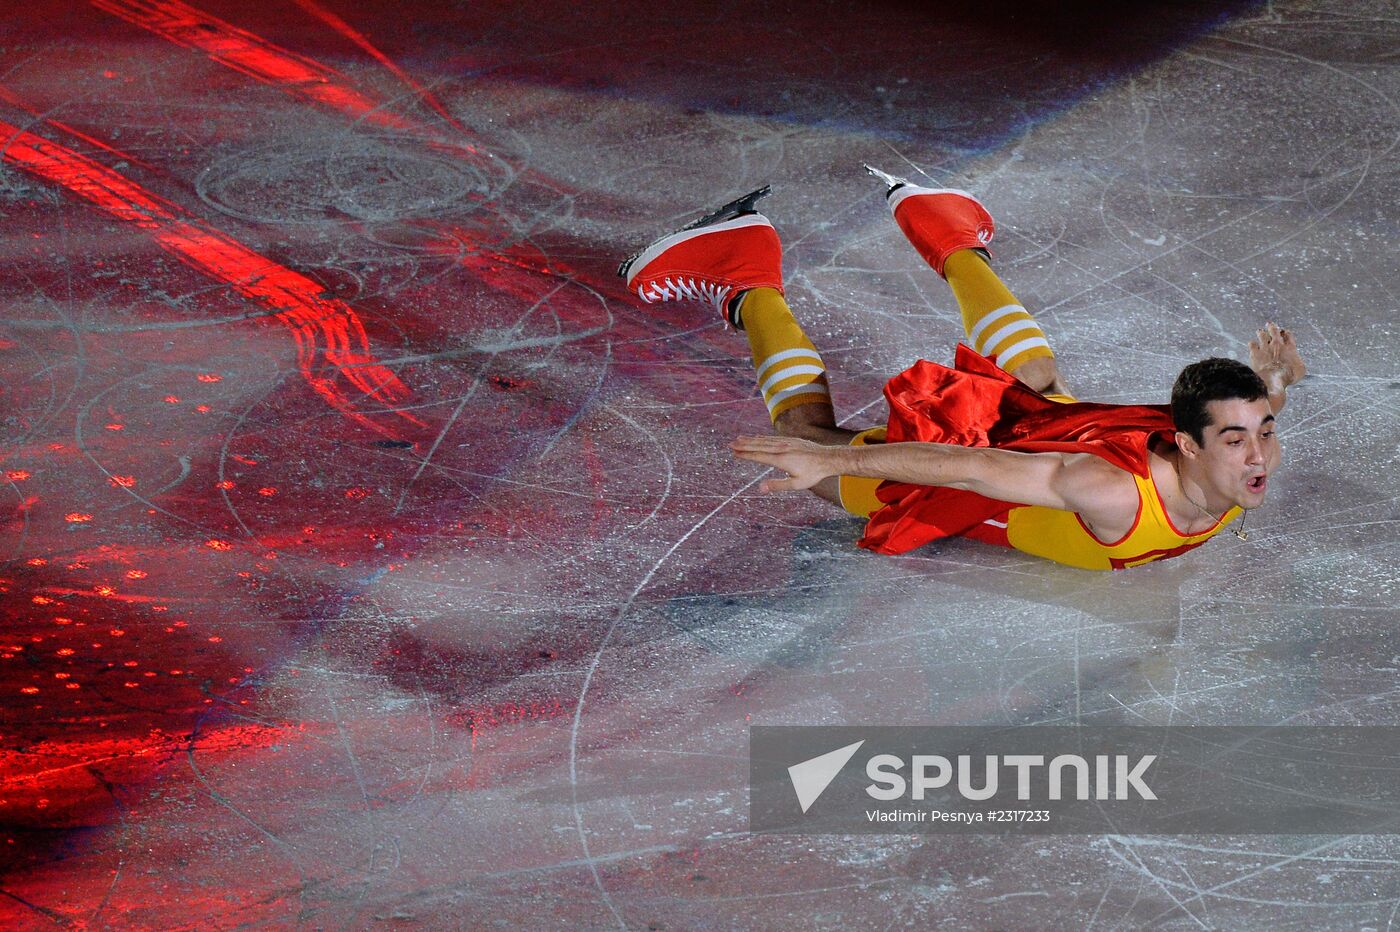 ISU Grand Prix of Figure Skating. Round 4. Exhibition performances